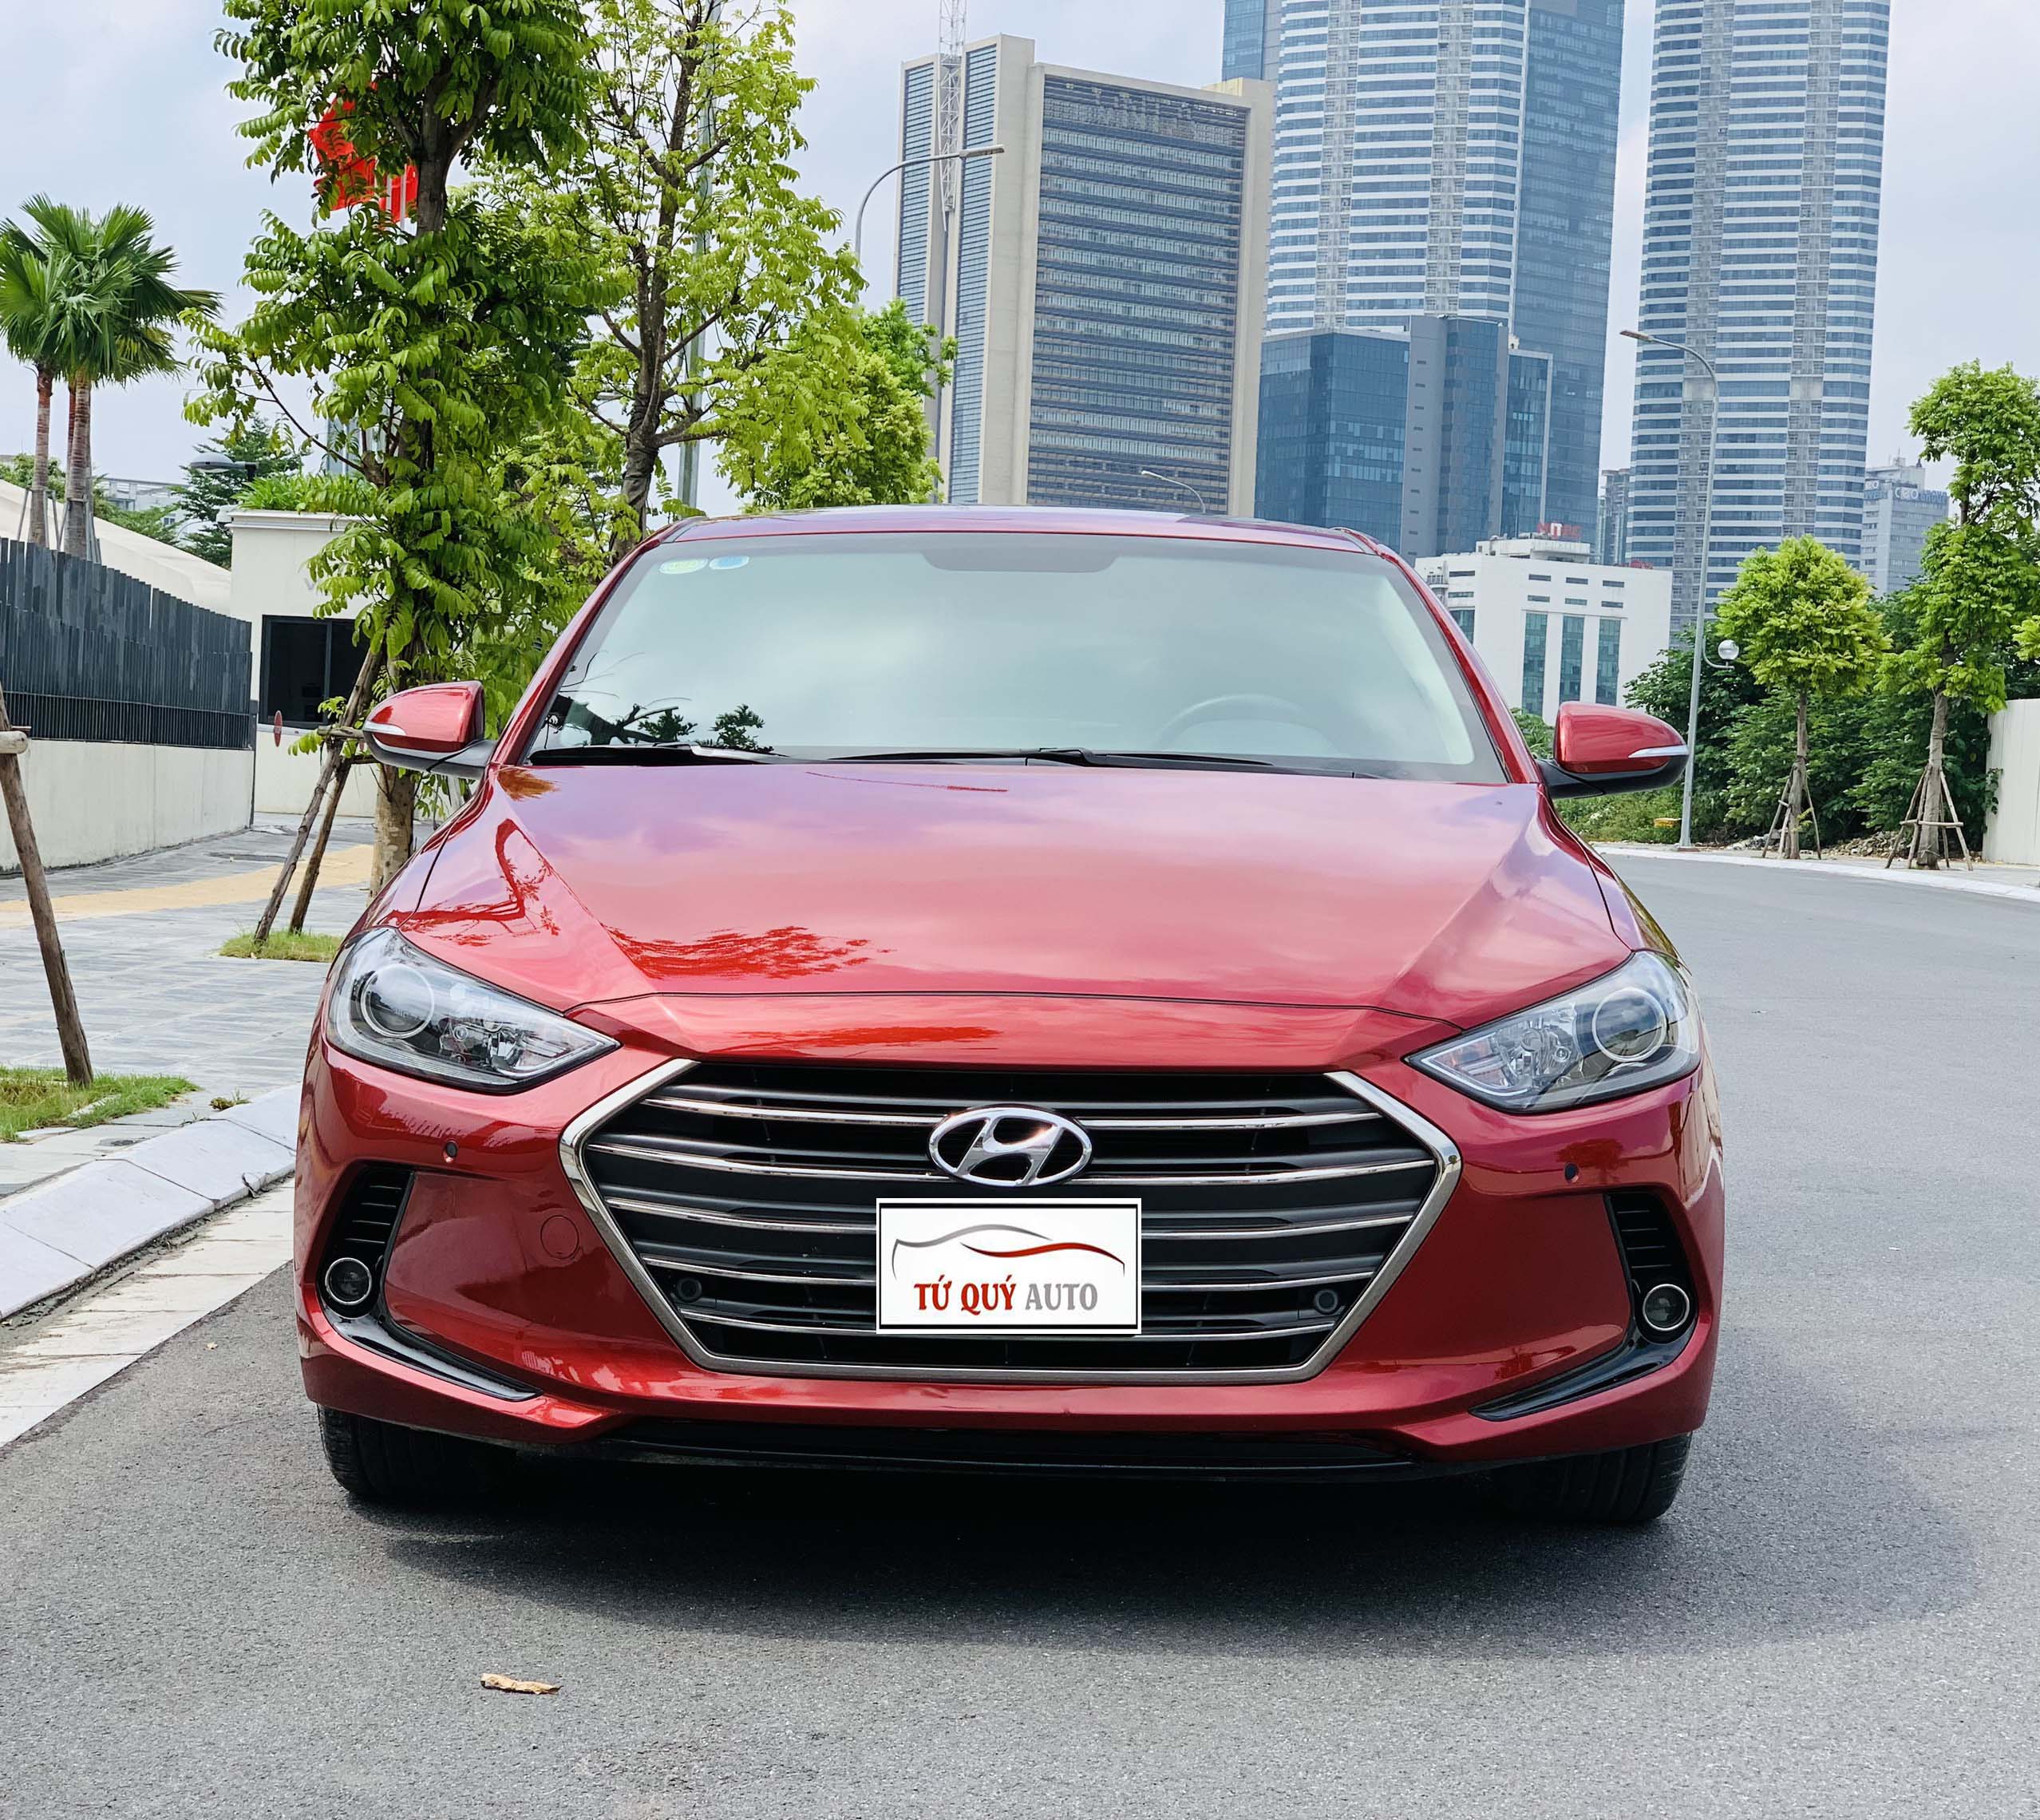 2018 Hyundai Elantra Eco Review High On Economy Light On Options